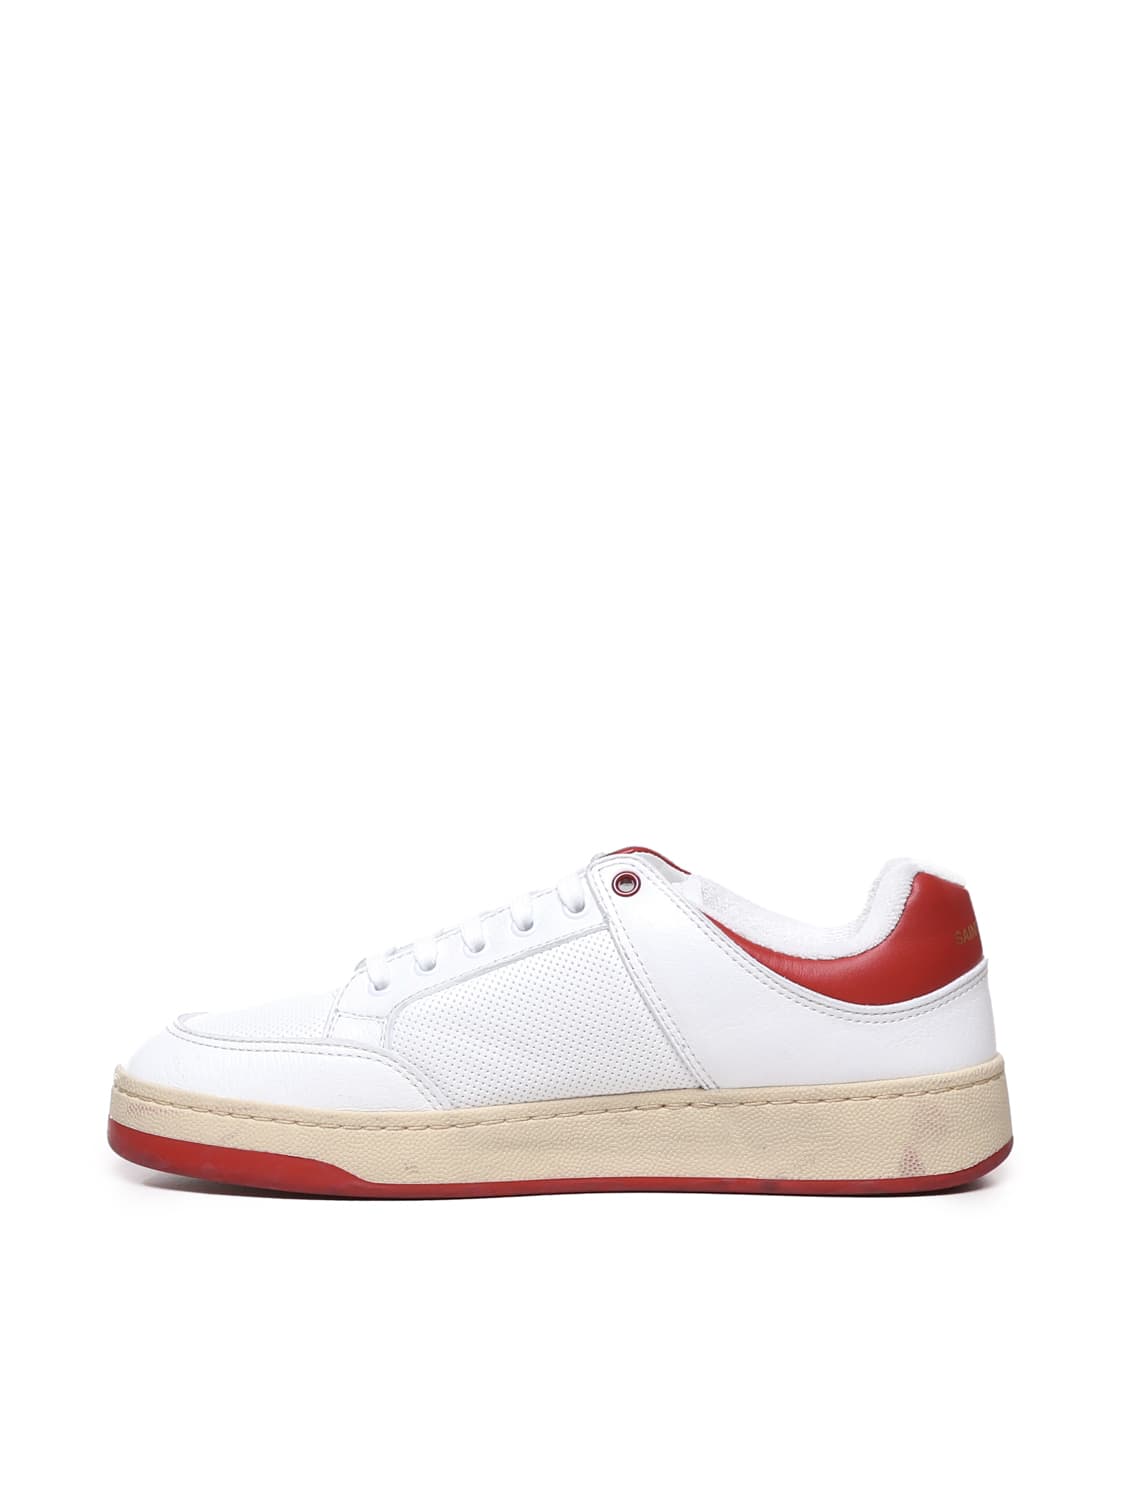 Shop Saint Laurent Sneakers Sl/61 In Calfskin In White, Red